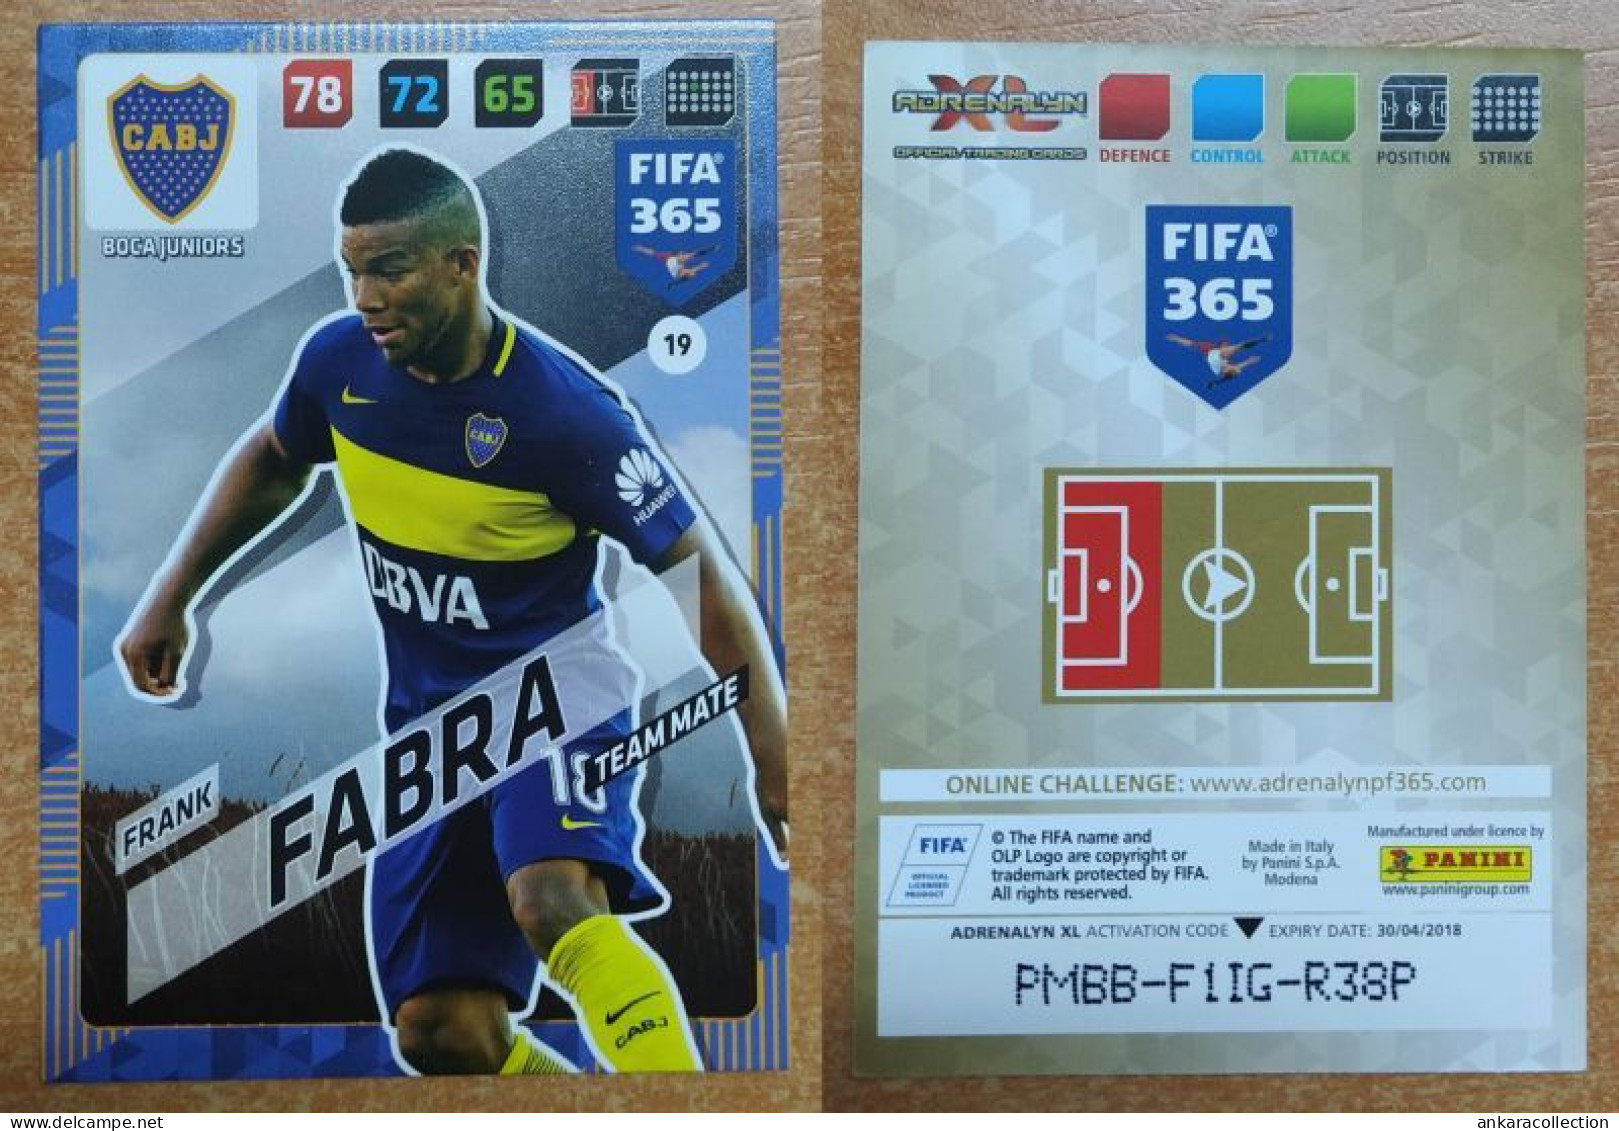 AC - 19 FRANK FABRA  BOCA JUNIORS  TEAM MATE  PANINI FIFA 365 2018 ADRENALYN TRADING CARD - Trading-Karten